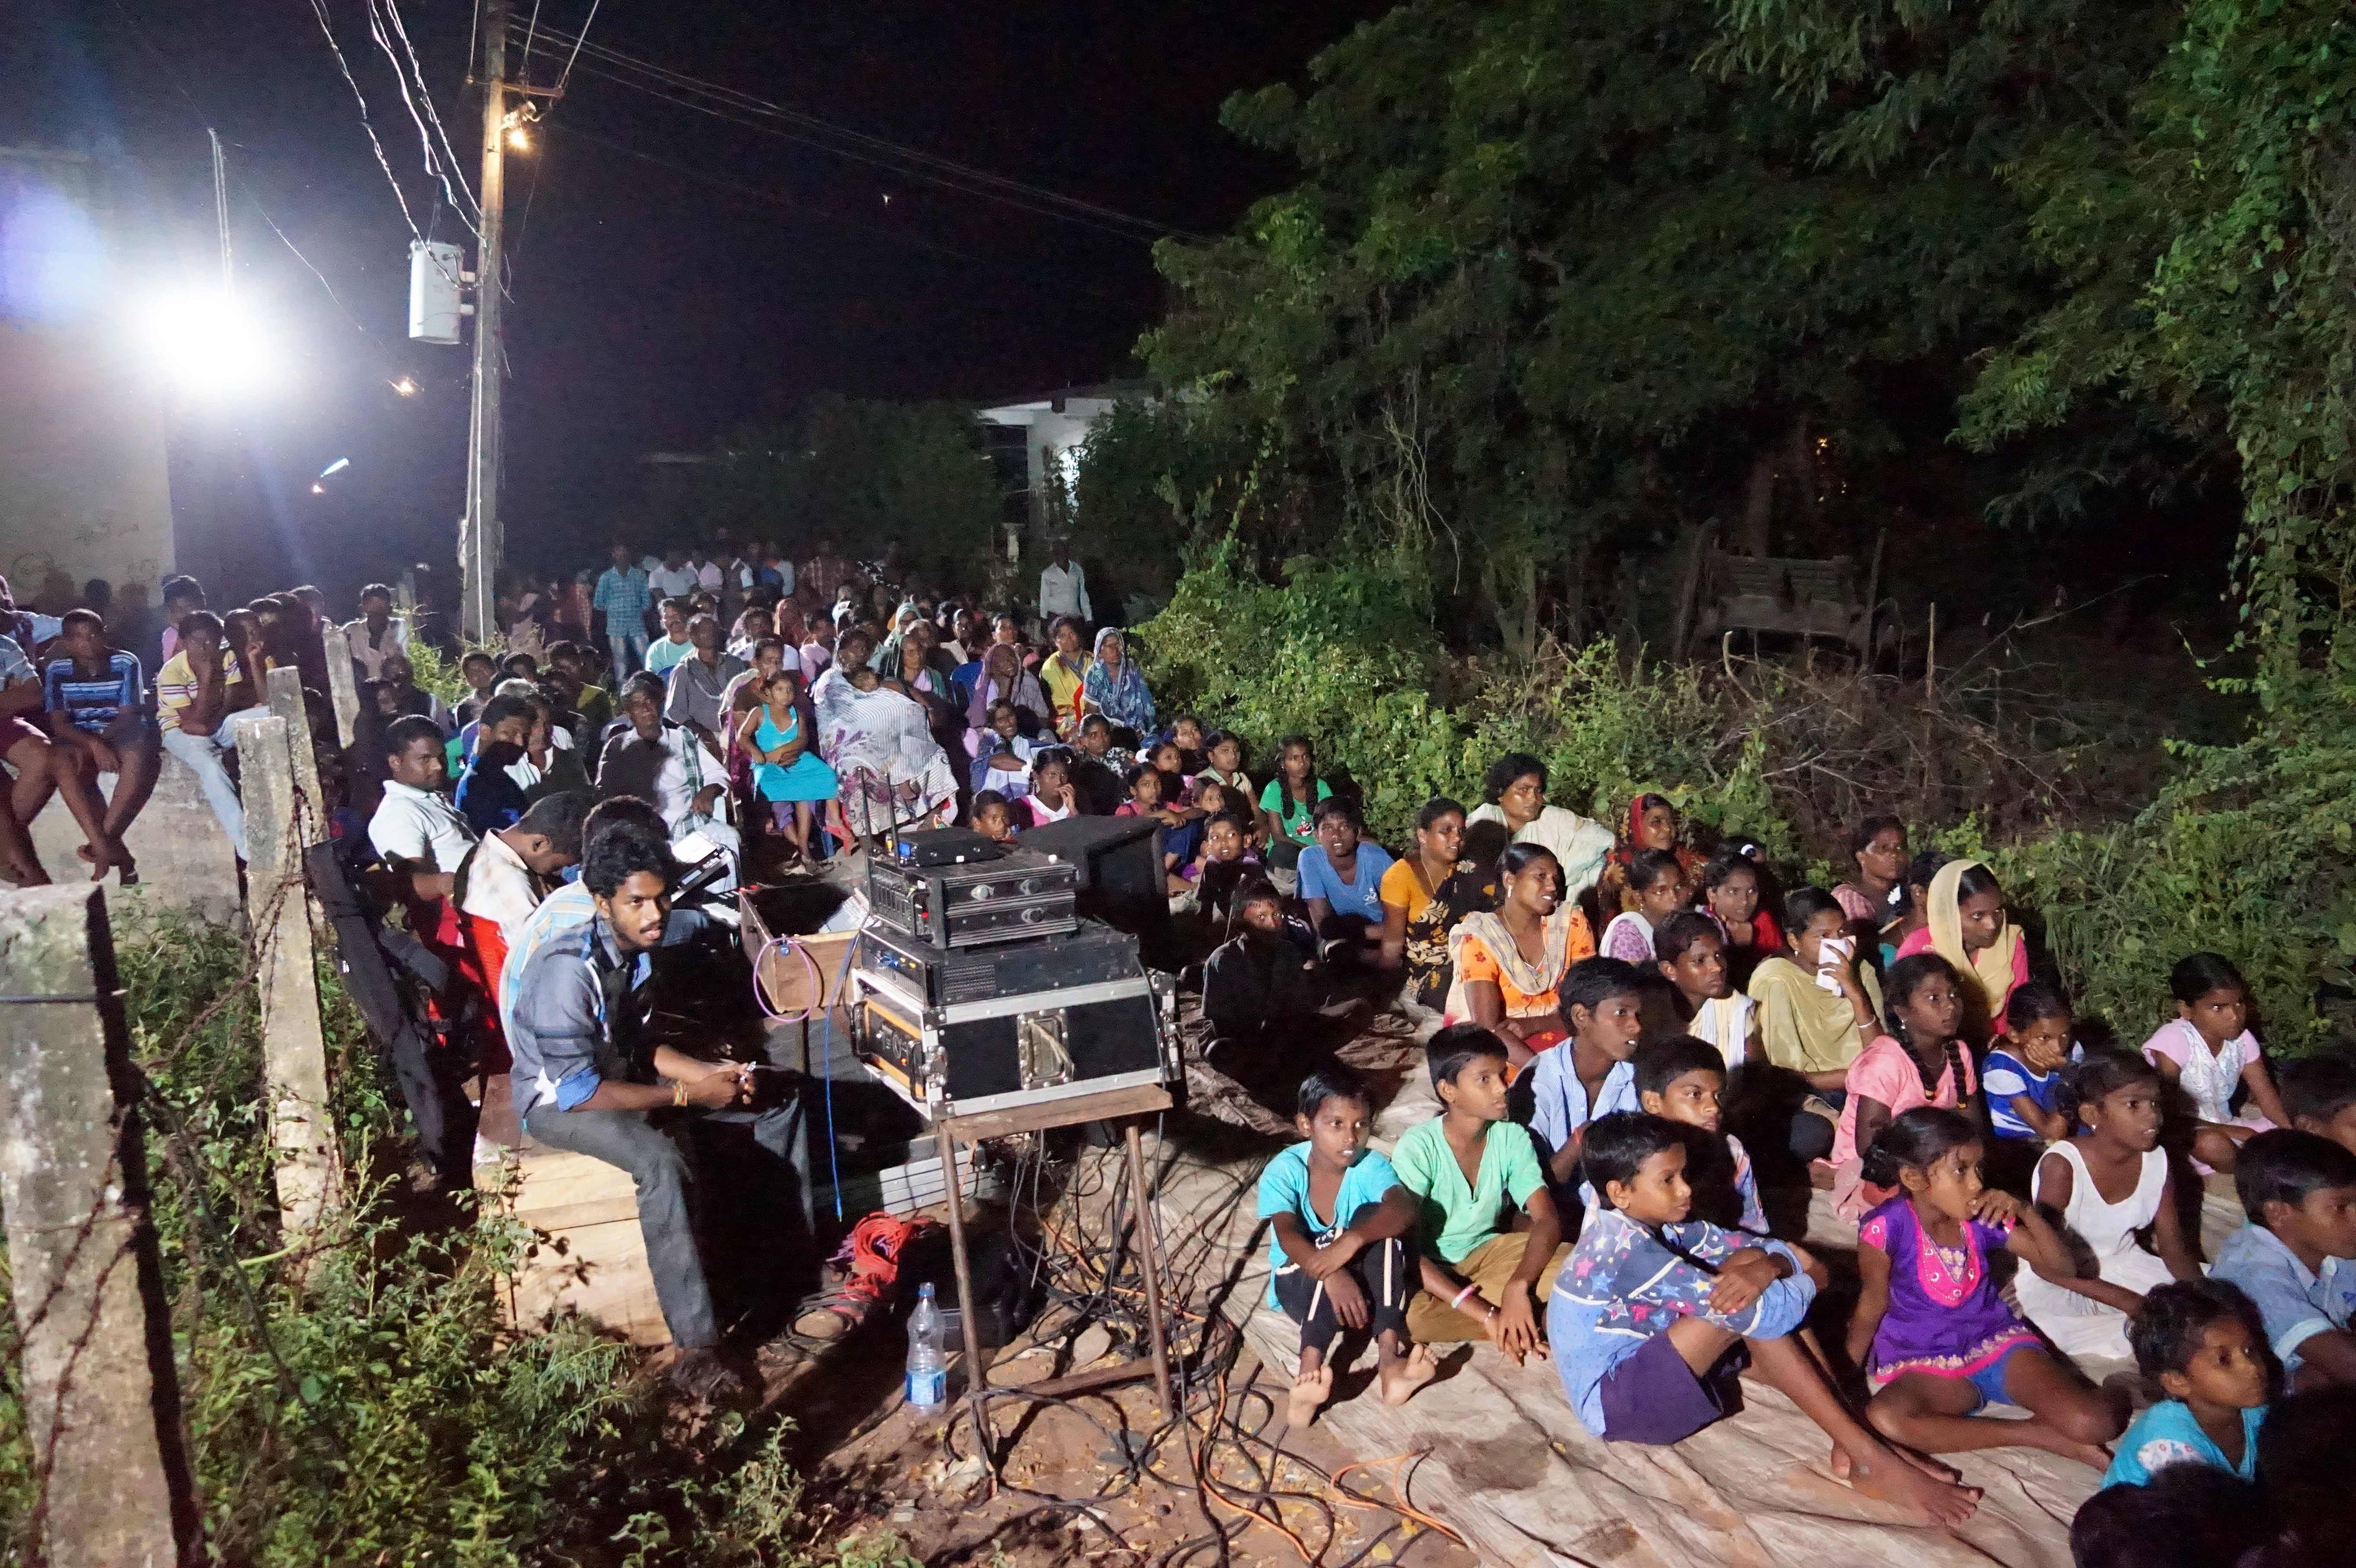 Youth Find Jesus at Gospel Meeting – Jonnapadu, India